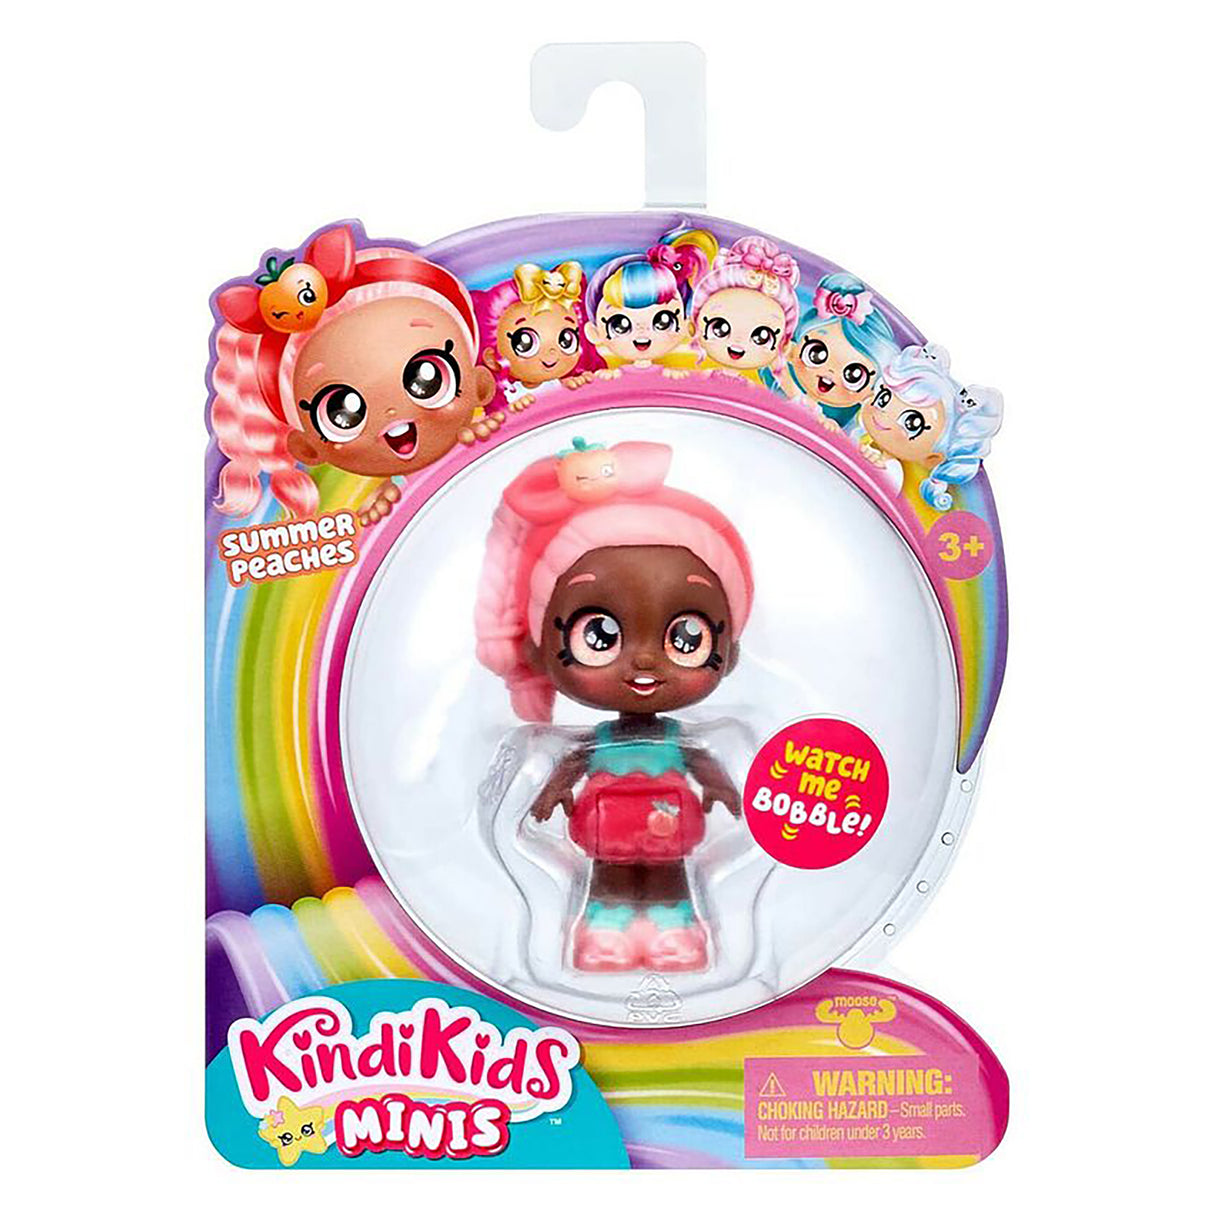 Kindi Kids Minis Doll - Summer Peaches